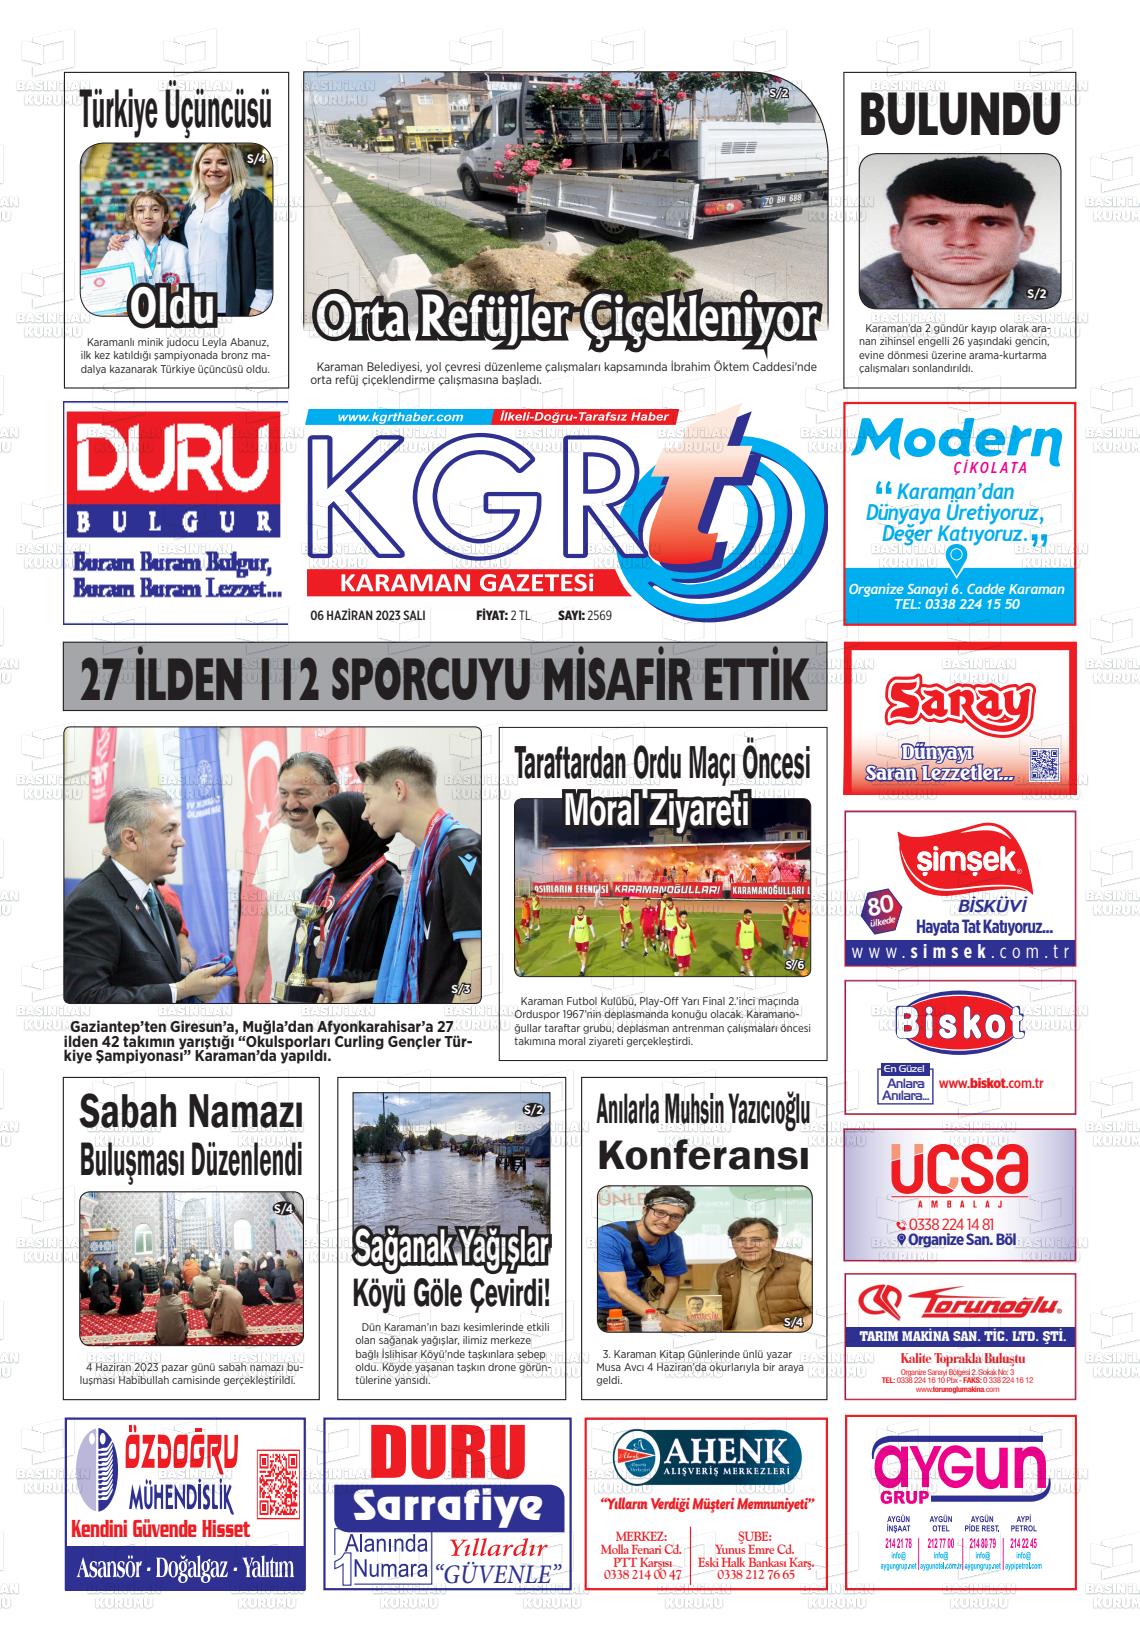 06 Haziran 2023 Kgrt Karaman Gazete Manşeti